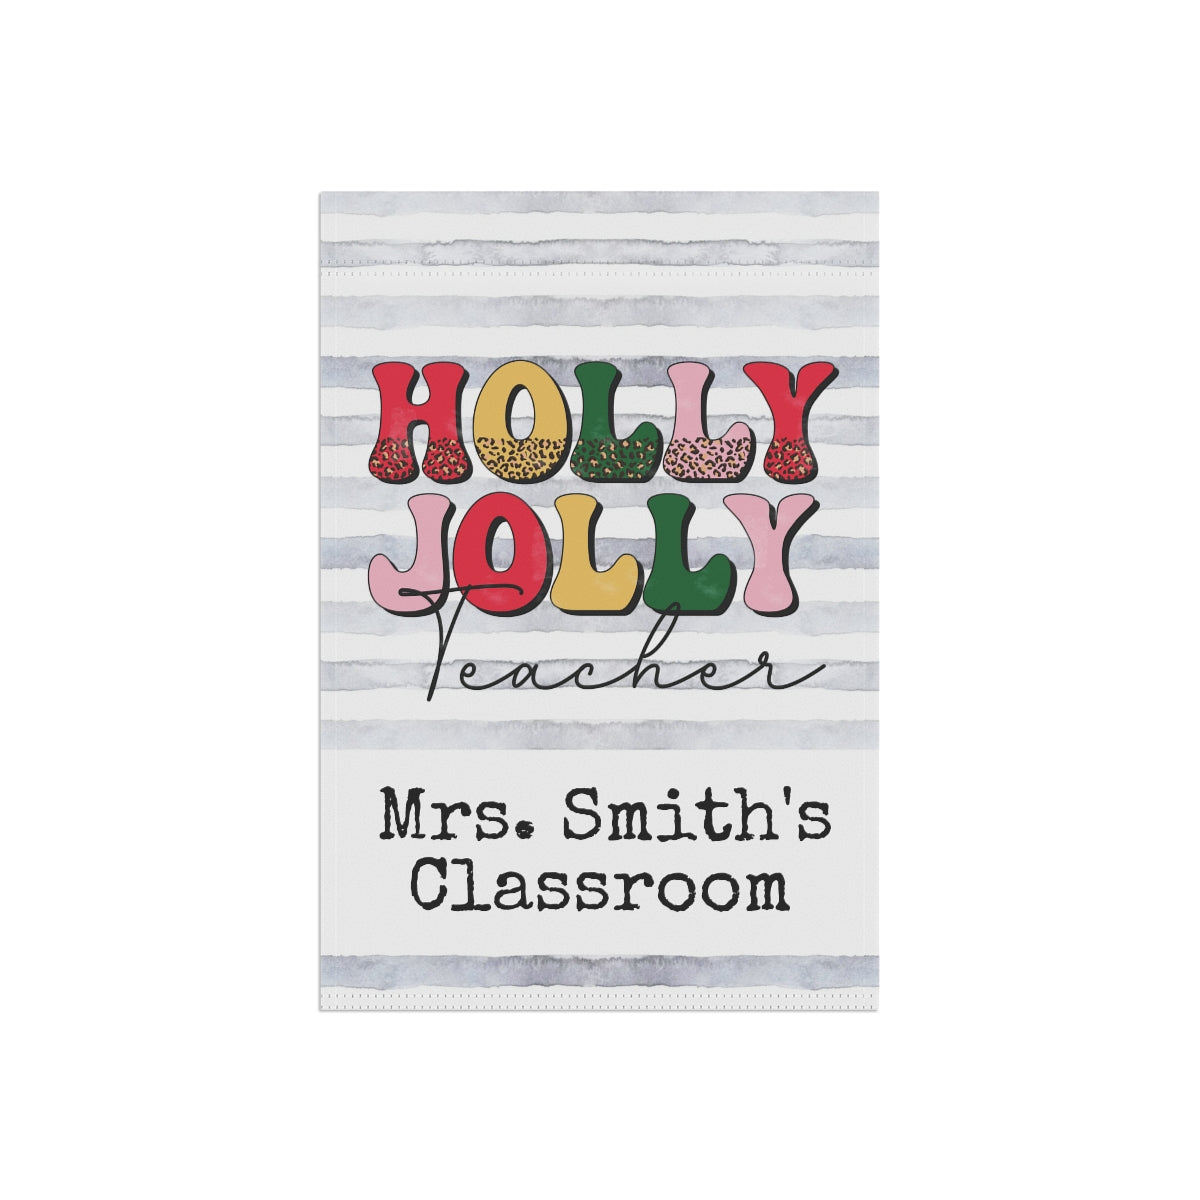 Holly Jolly Teacher Christmas Personalized Garden Flag